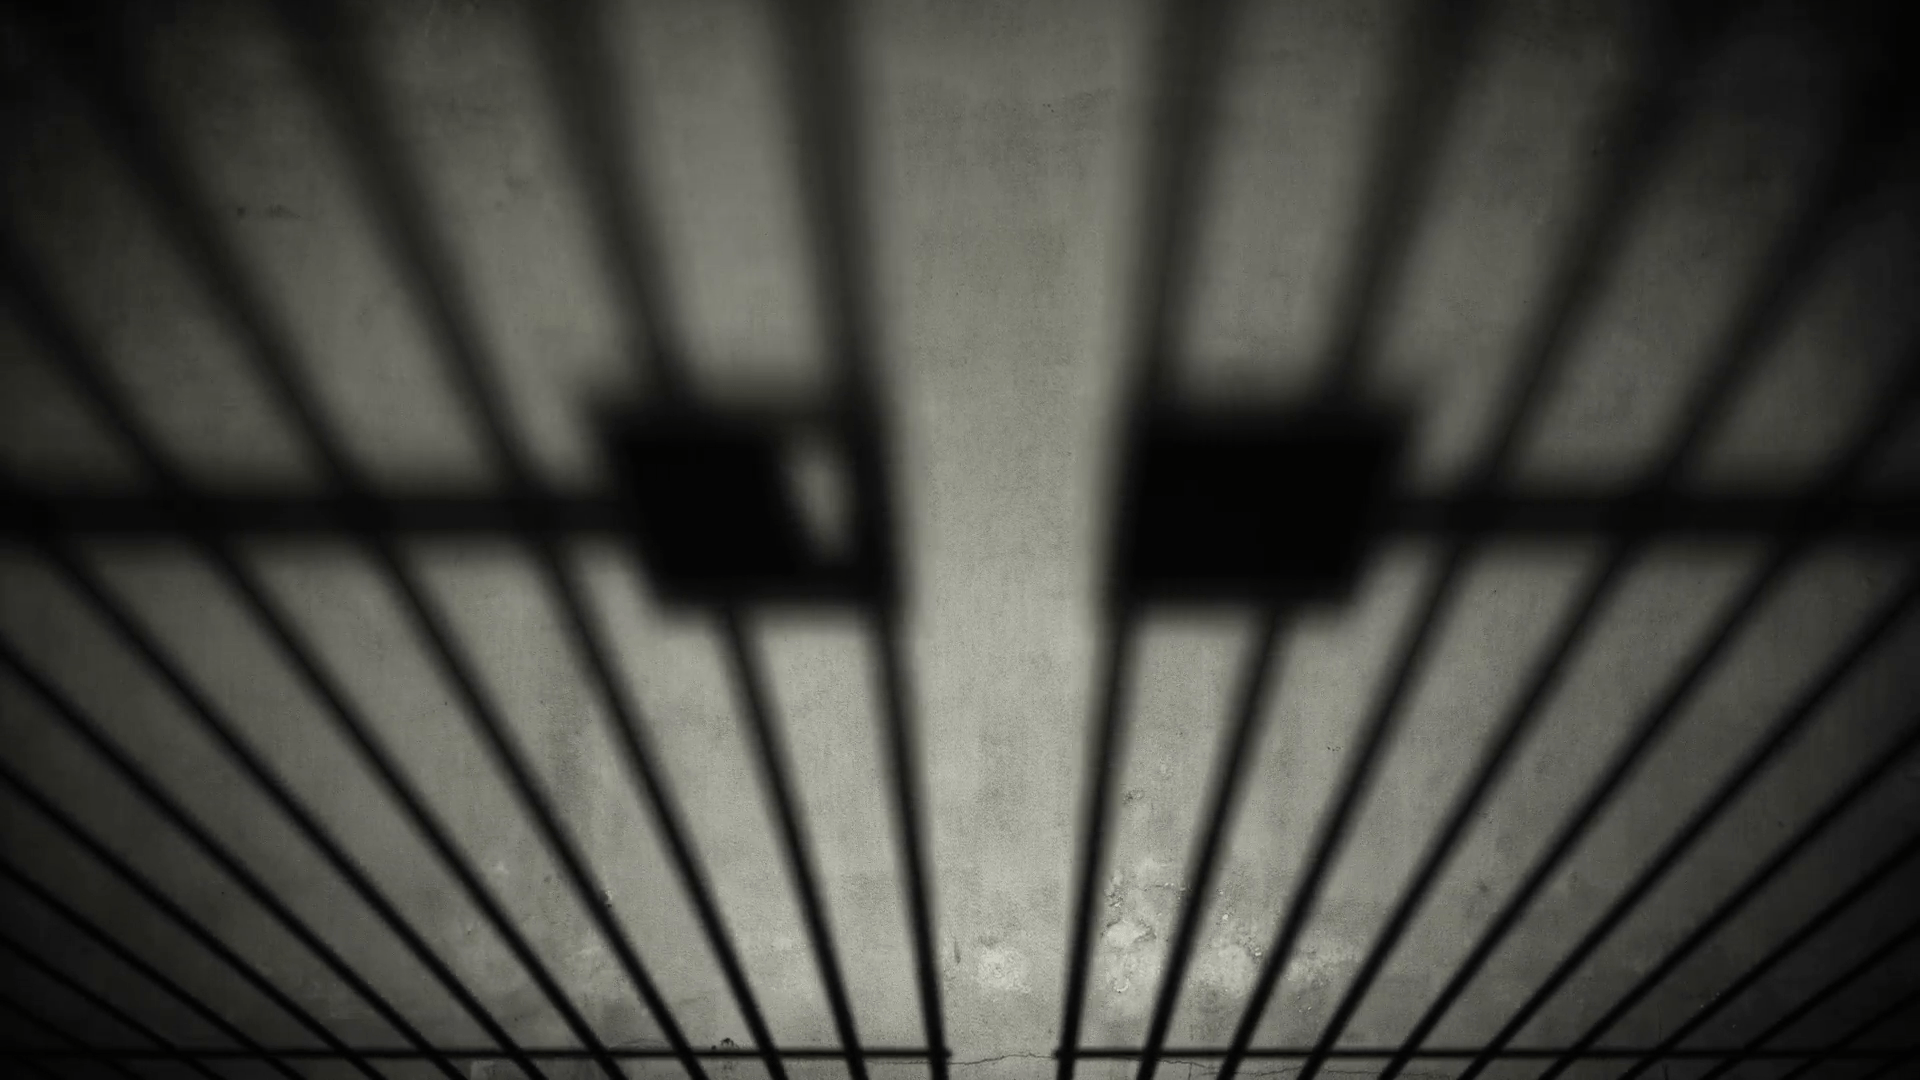 Life imprisonment, prison cell door closing shadow on dark concrete